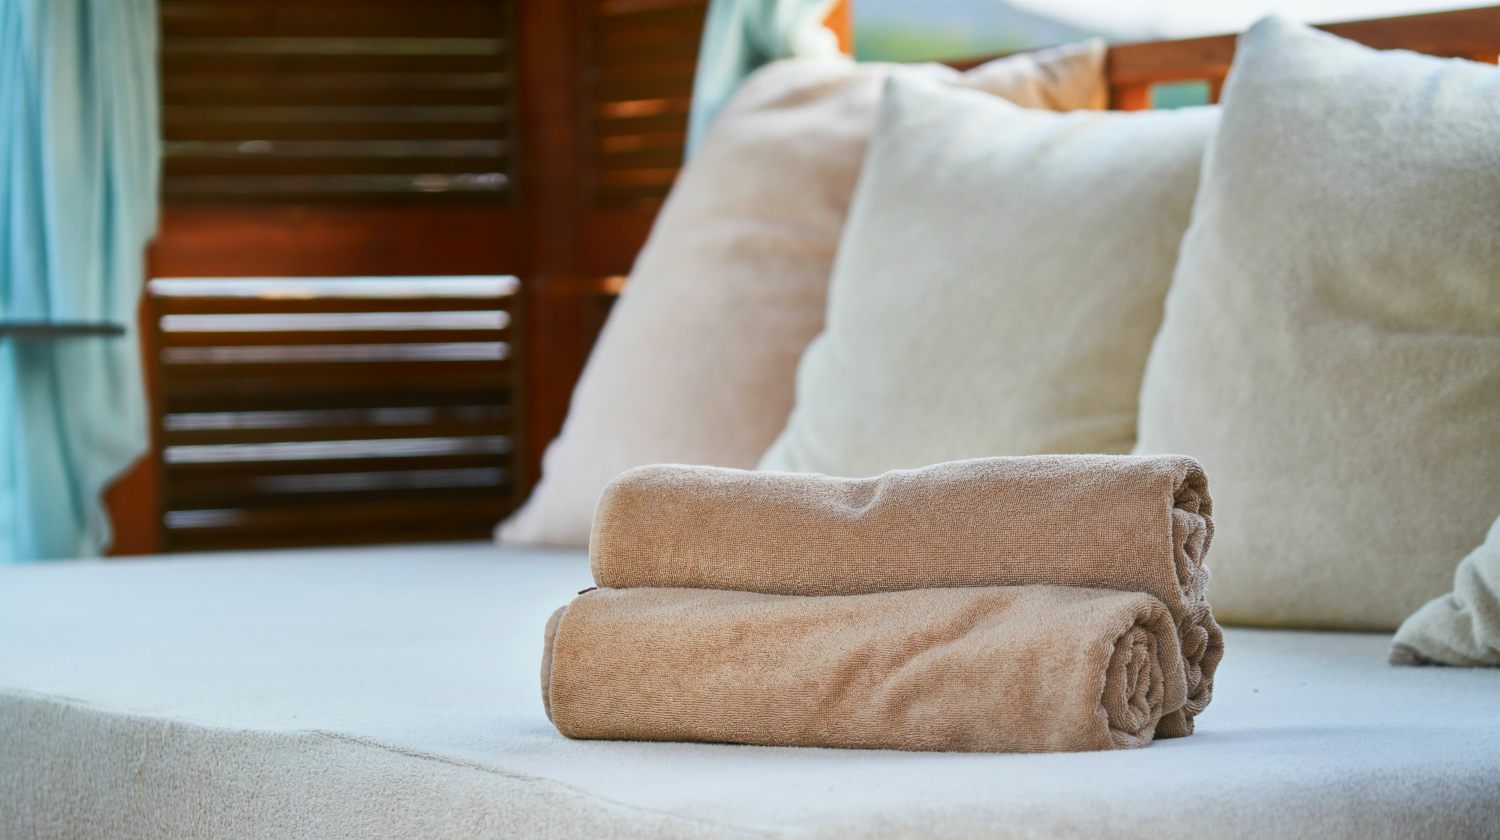 https://robemart.com/blog/wp-content/webpc-passthru.php?src=https://robemart.com/blog/wp-content/uploads/2019/10/bed-armchair-comfort-relax-guest-towels-pb-Featured.jpg&nocache=1